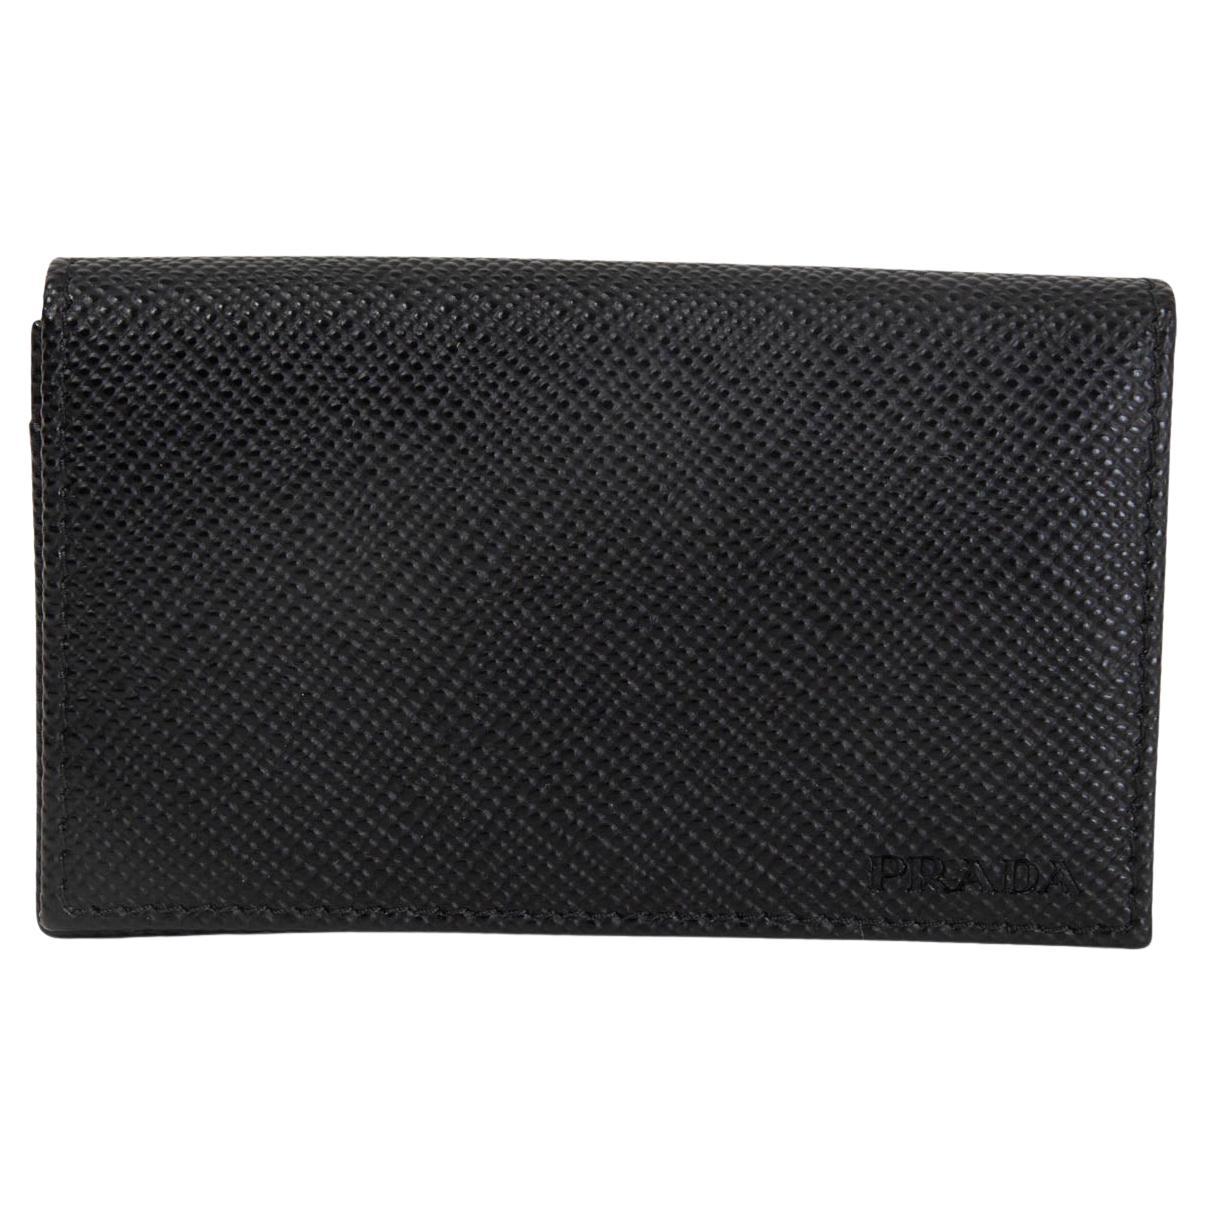 PRADA black leather SAFFIANO Credit Card & Coin Wallet